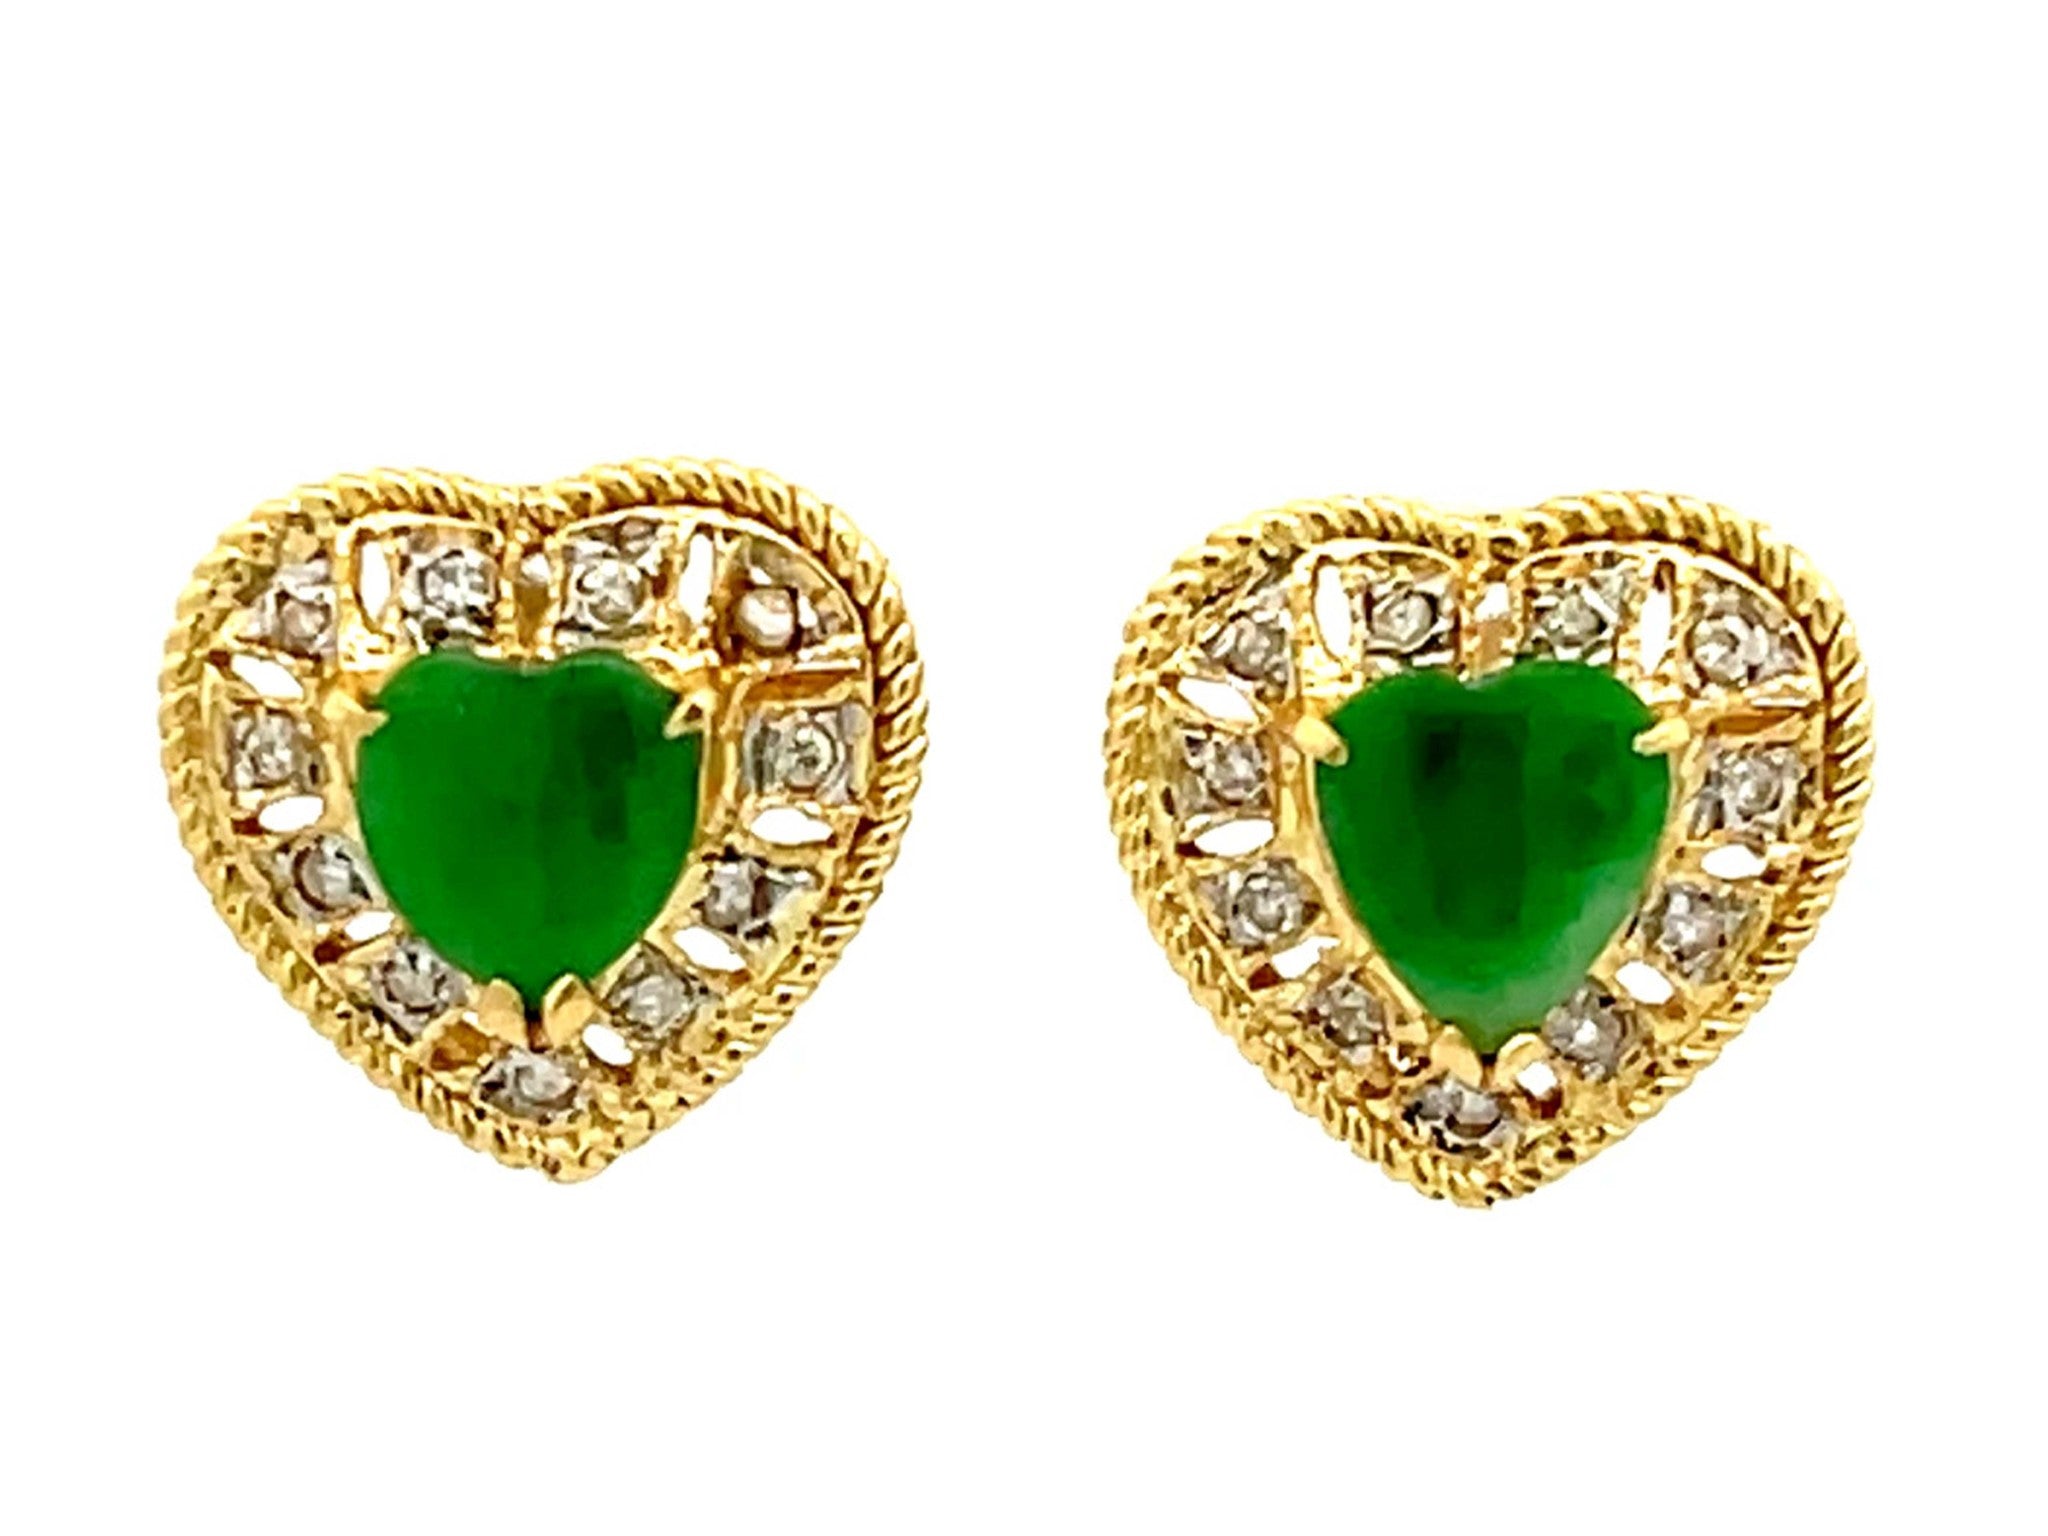 Green Apple Jade Heart Shaped Earrings with Diamond Halos in 18K Yellow Gold